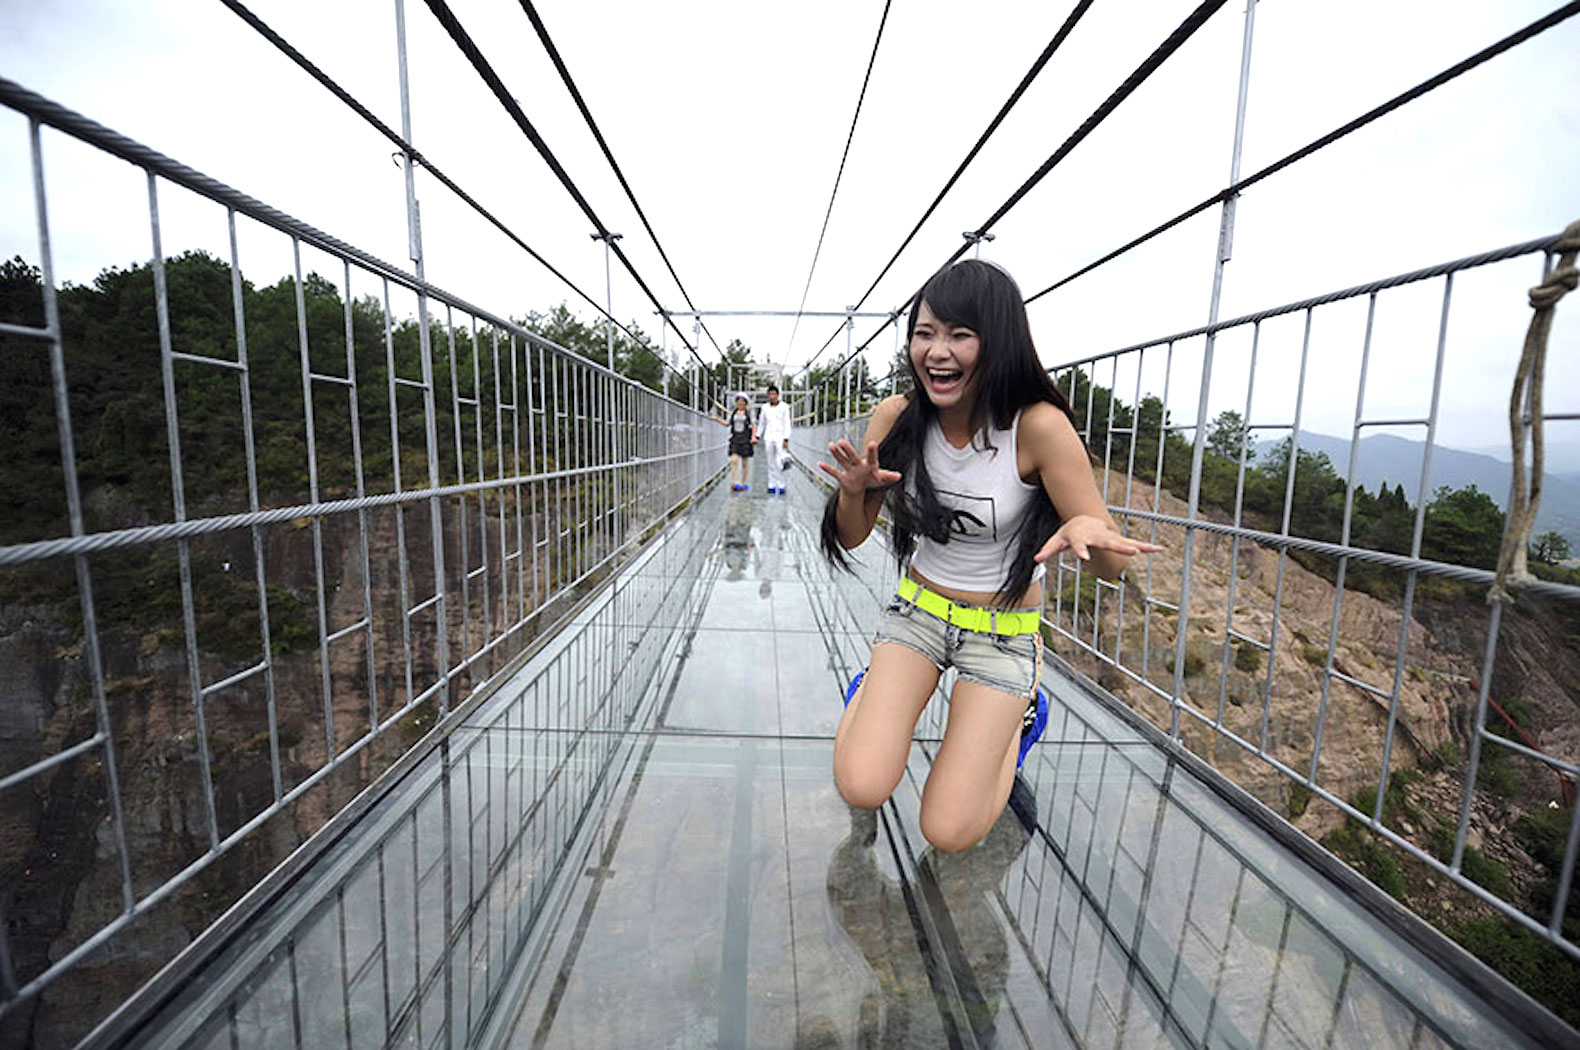 The world's longest glass bridge was opened in China